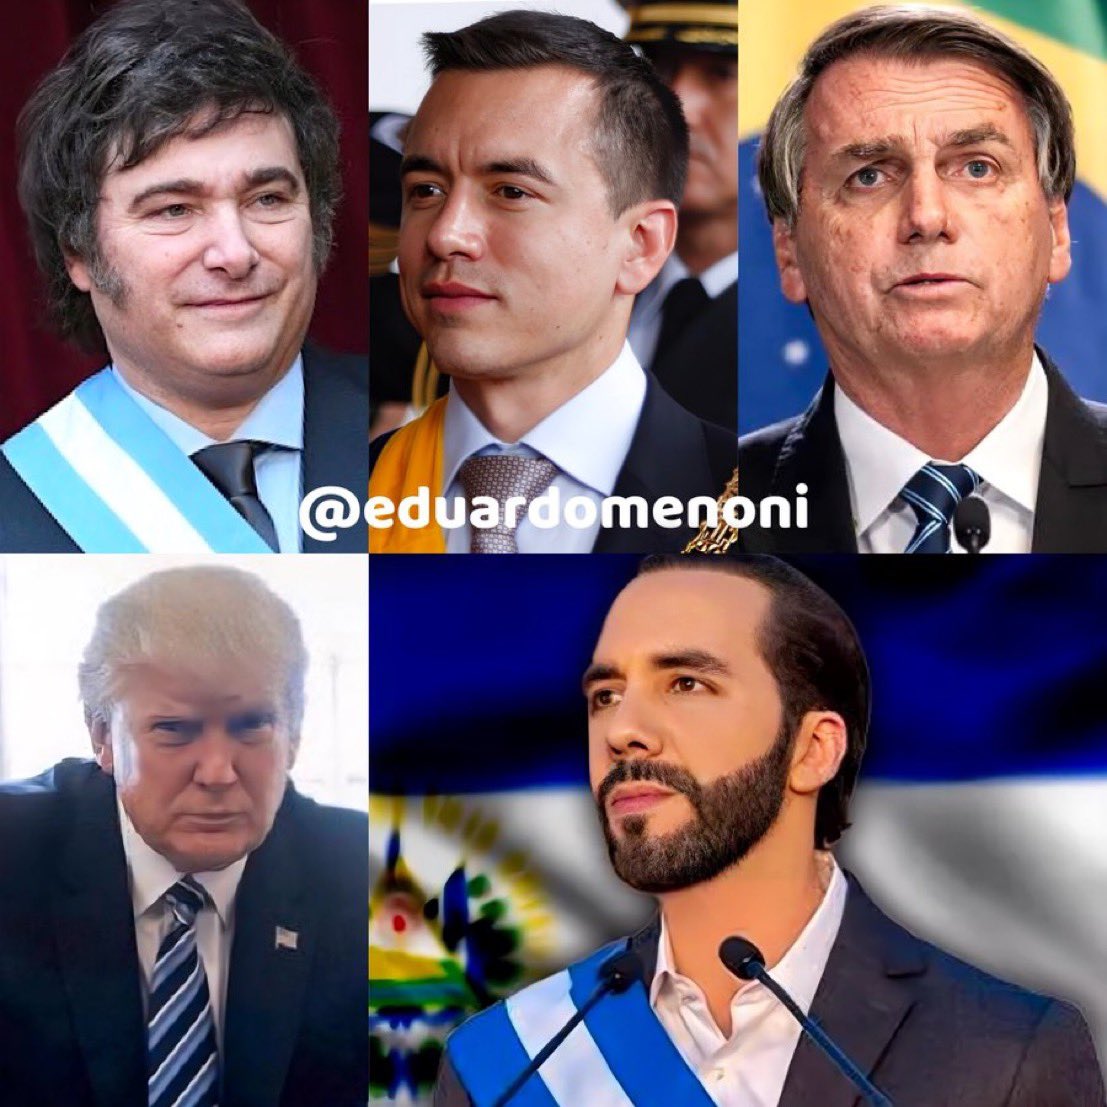 ¿Apoyas a estos grandes patriotas?

🇸🇻 Nayib Bukele
🇦🇷 Javier Milei
🇺🇸 Donald Trump
🇧🇷 Jair Bolsonaro 
🇪🇨 Daniel Noboa

Yo al 100% 🔥